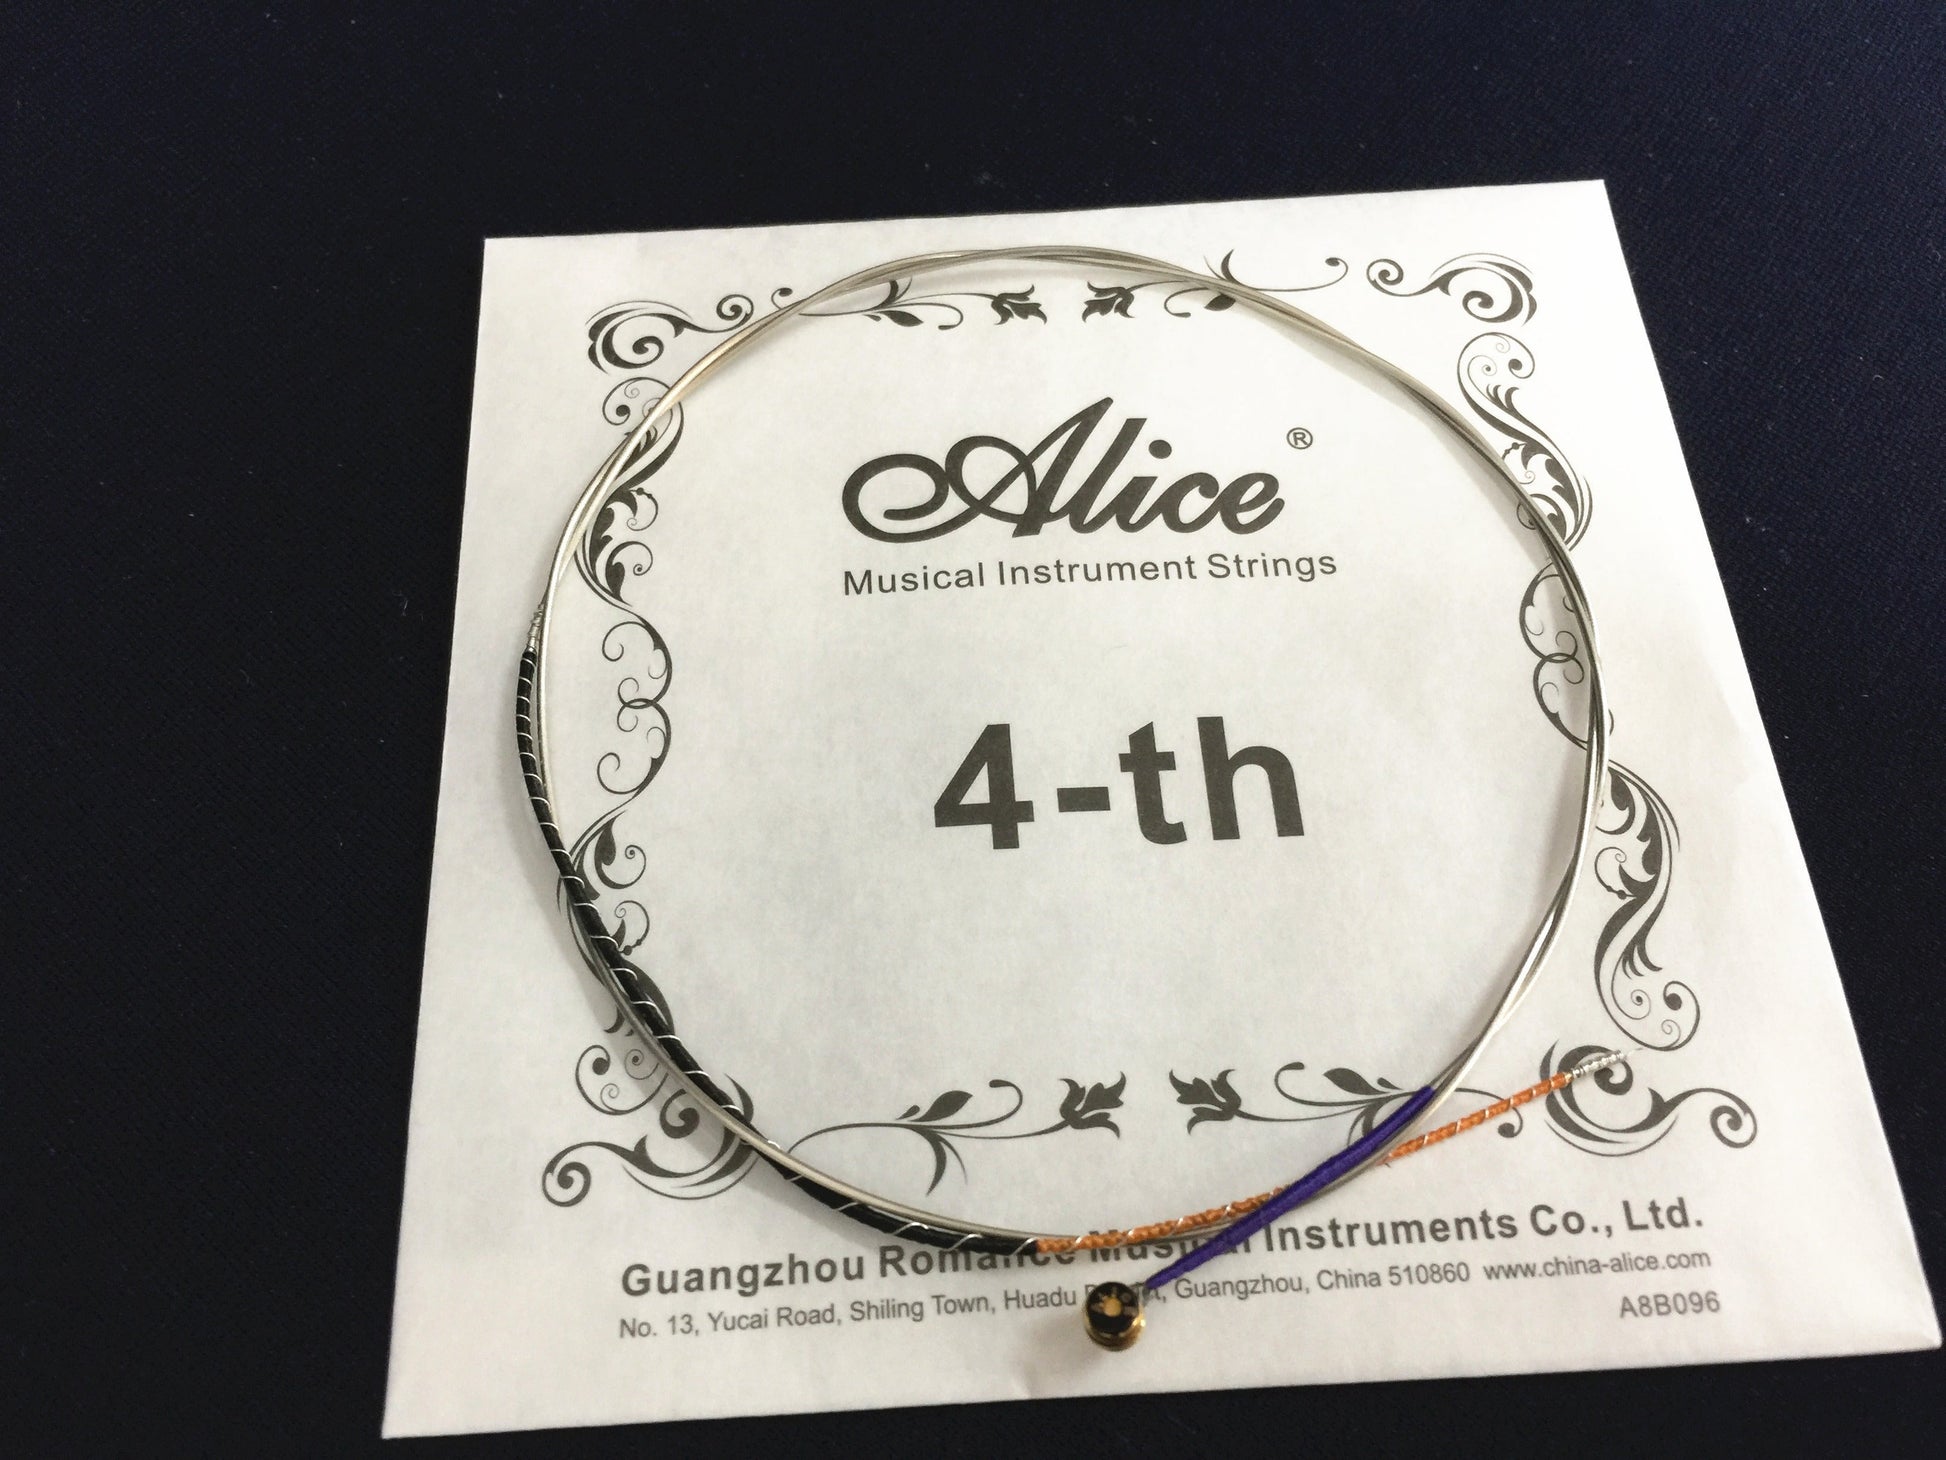 Alice A707 Standard Size Violin String Set